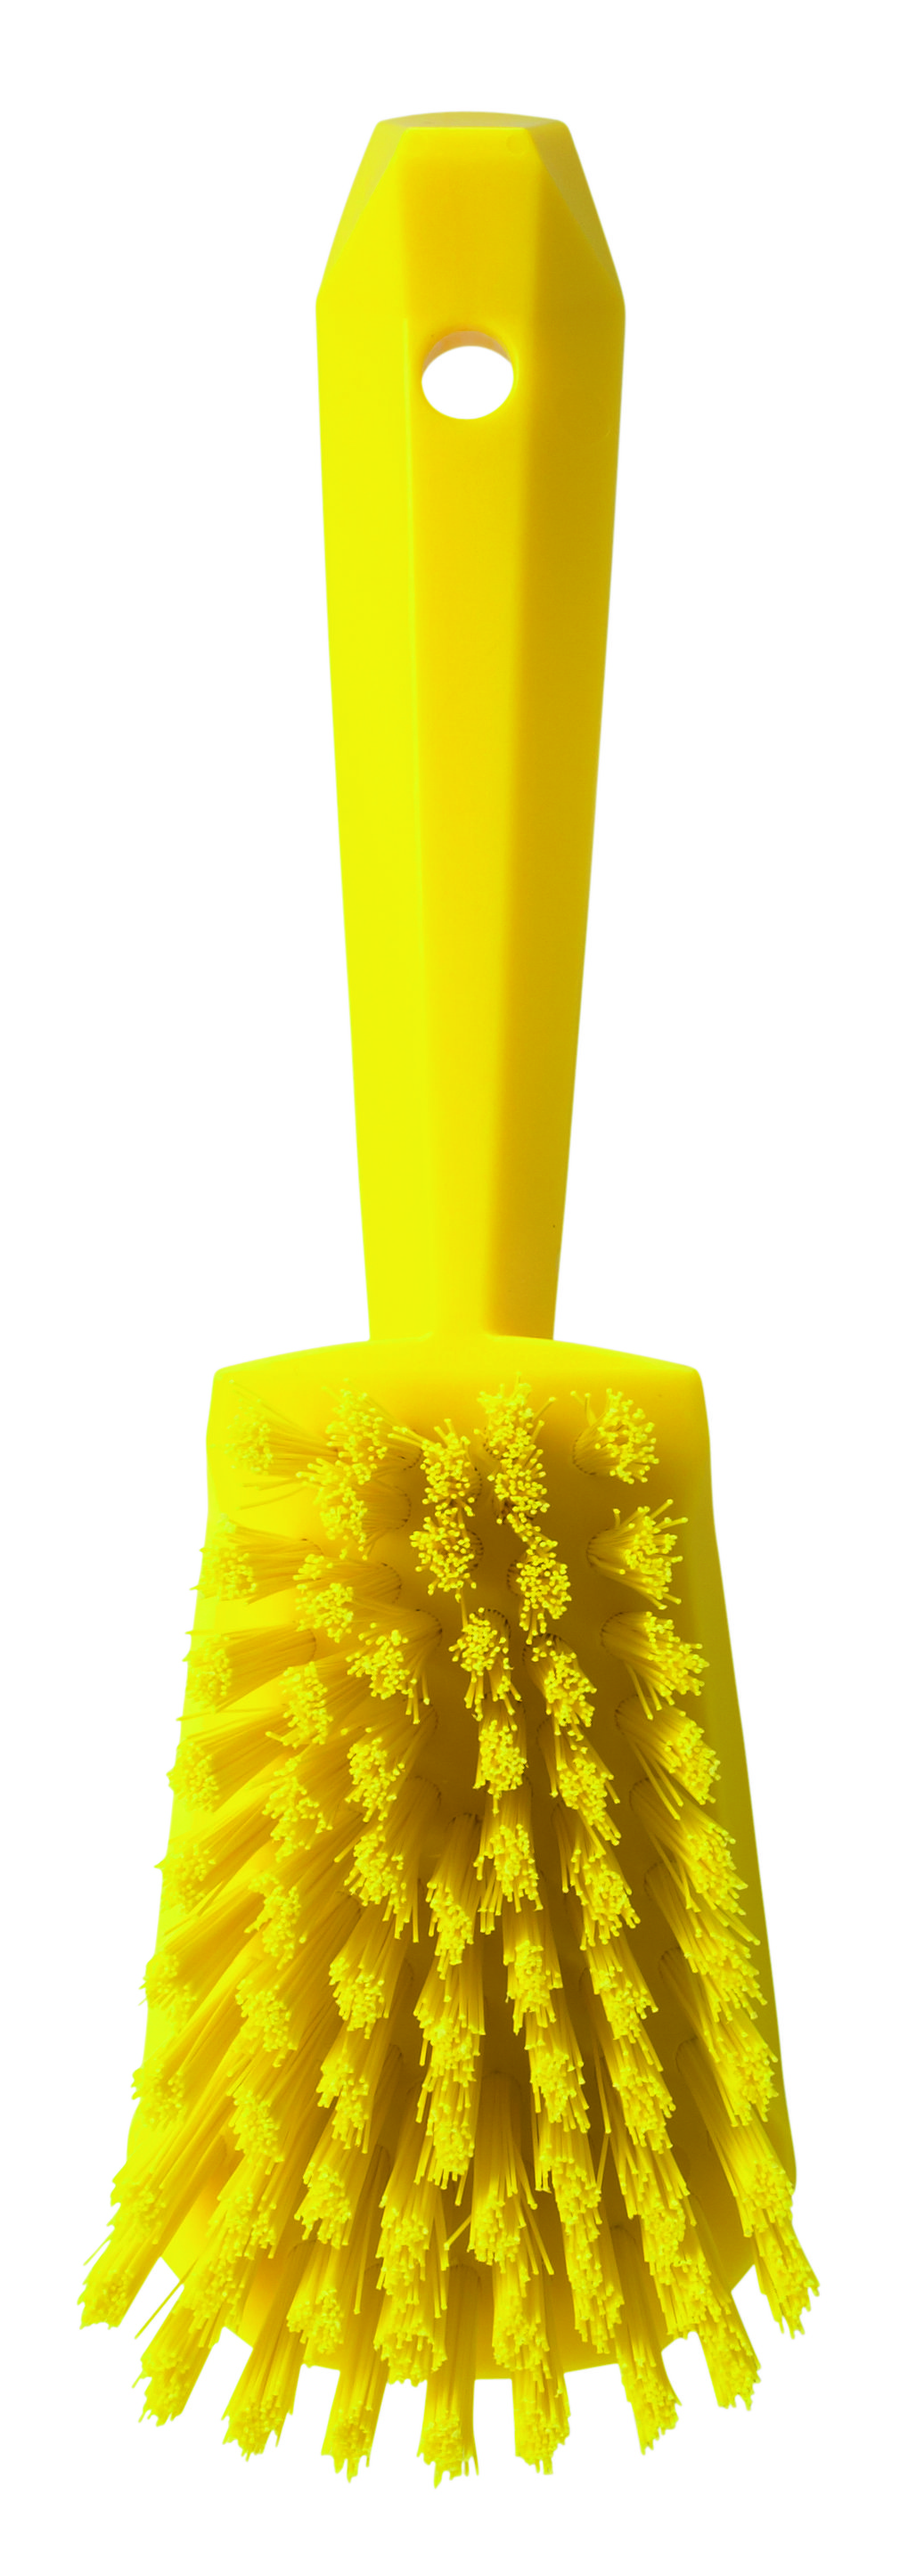 Щетка Vikan ручная для мытья с короткой ручкой жесткая, 270 мм, желтая